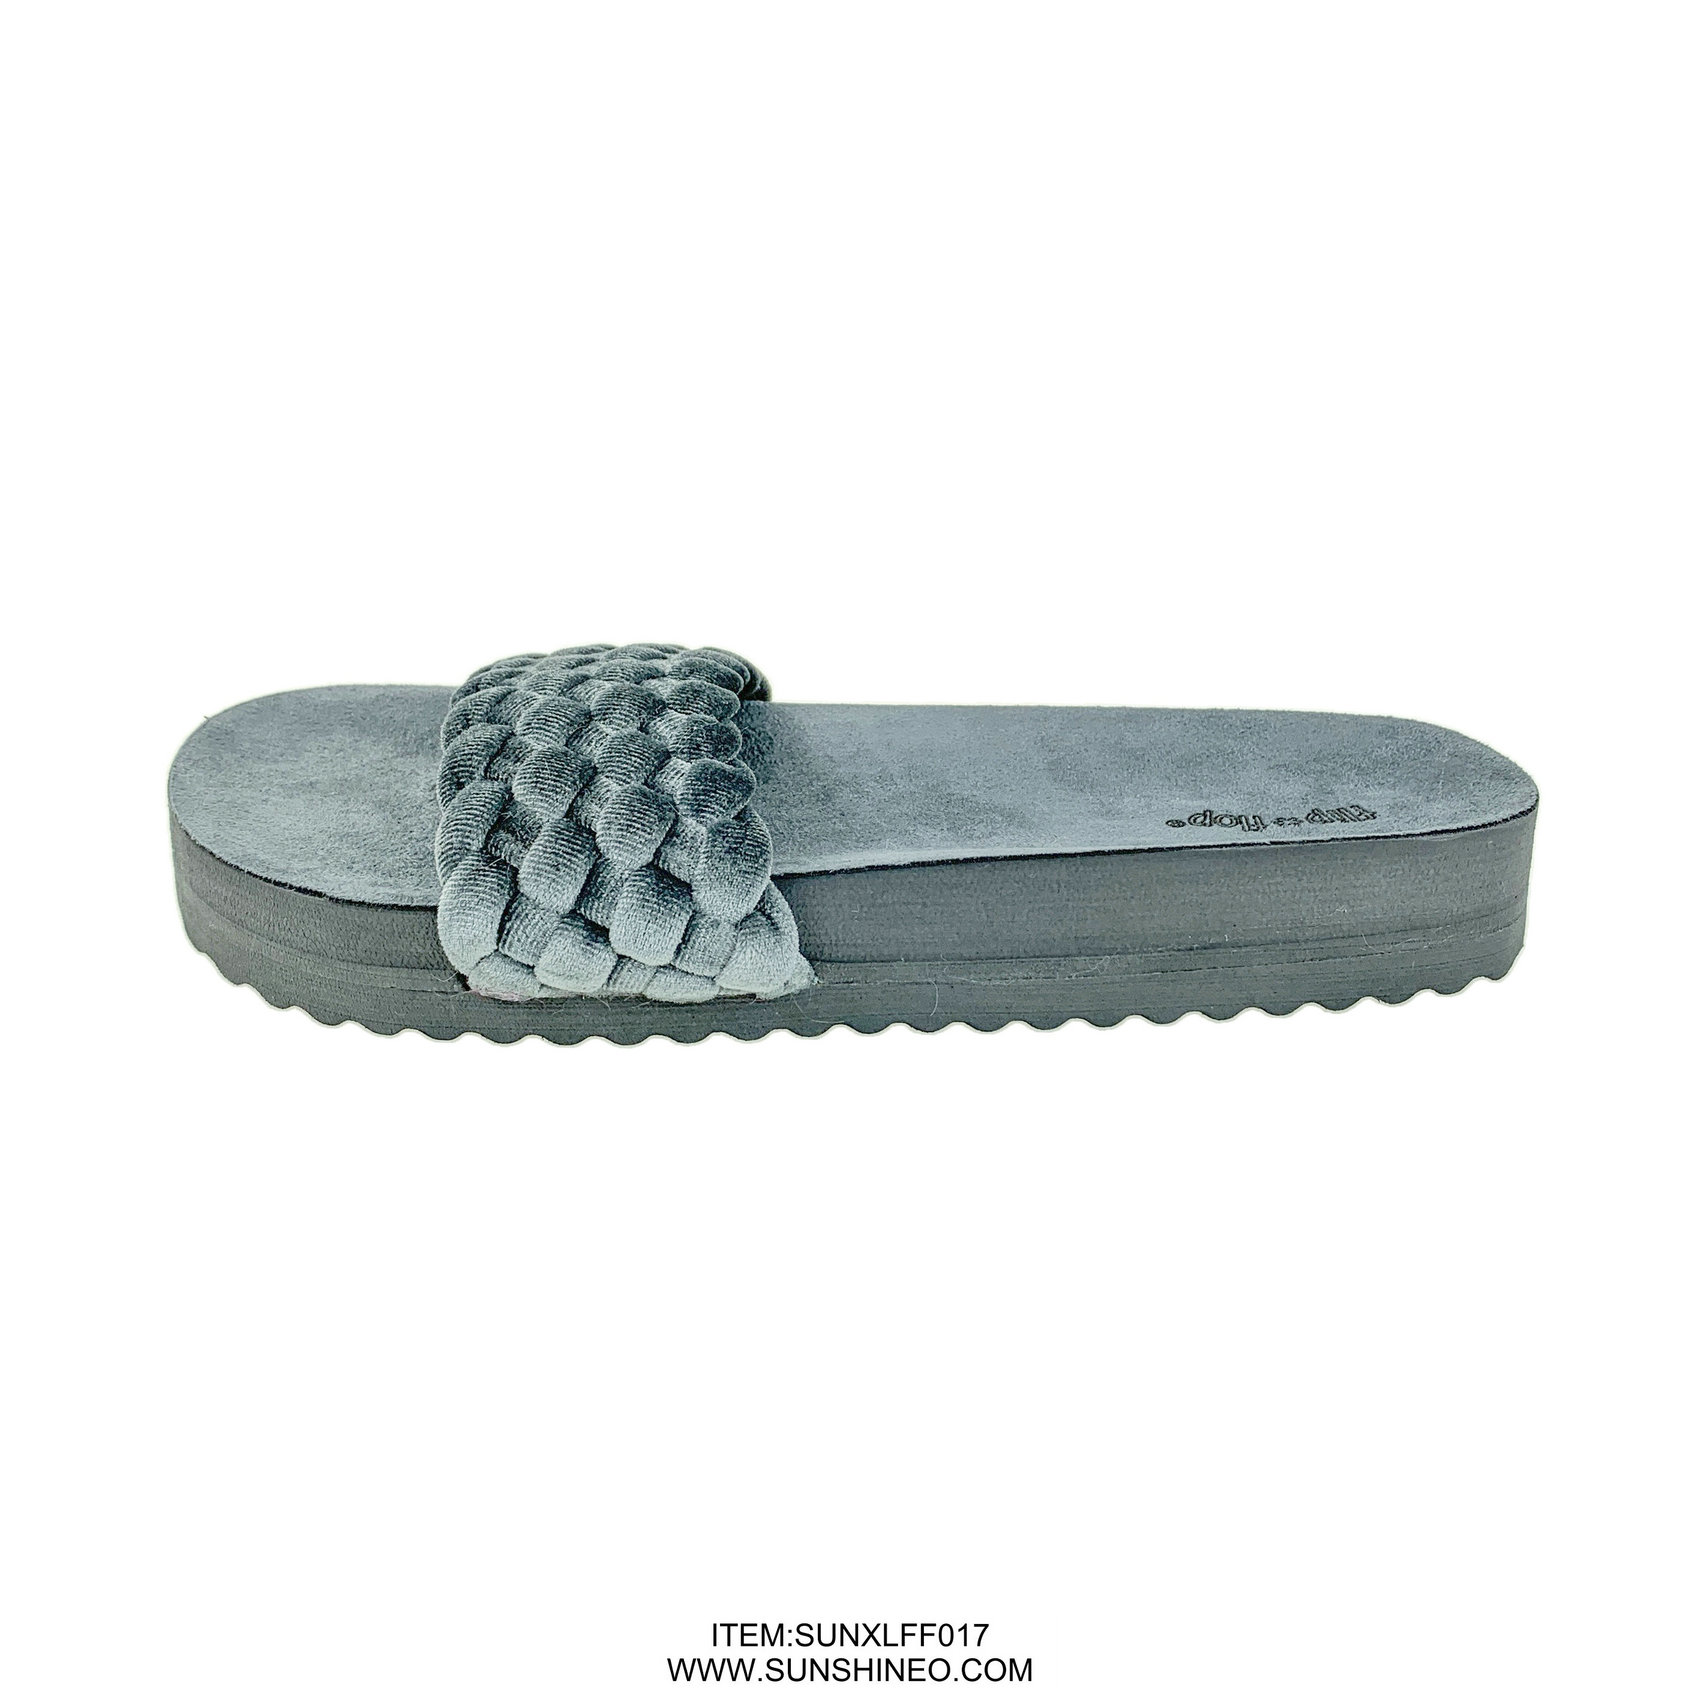 SUNXLFF017 fur flip flop sandals winter slippers